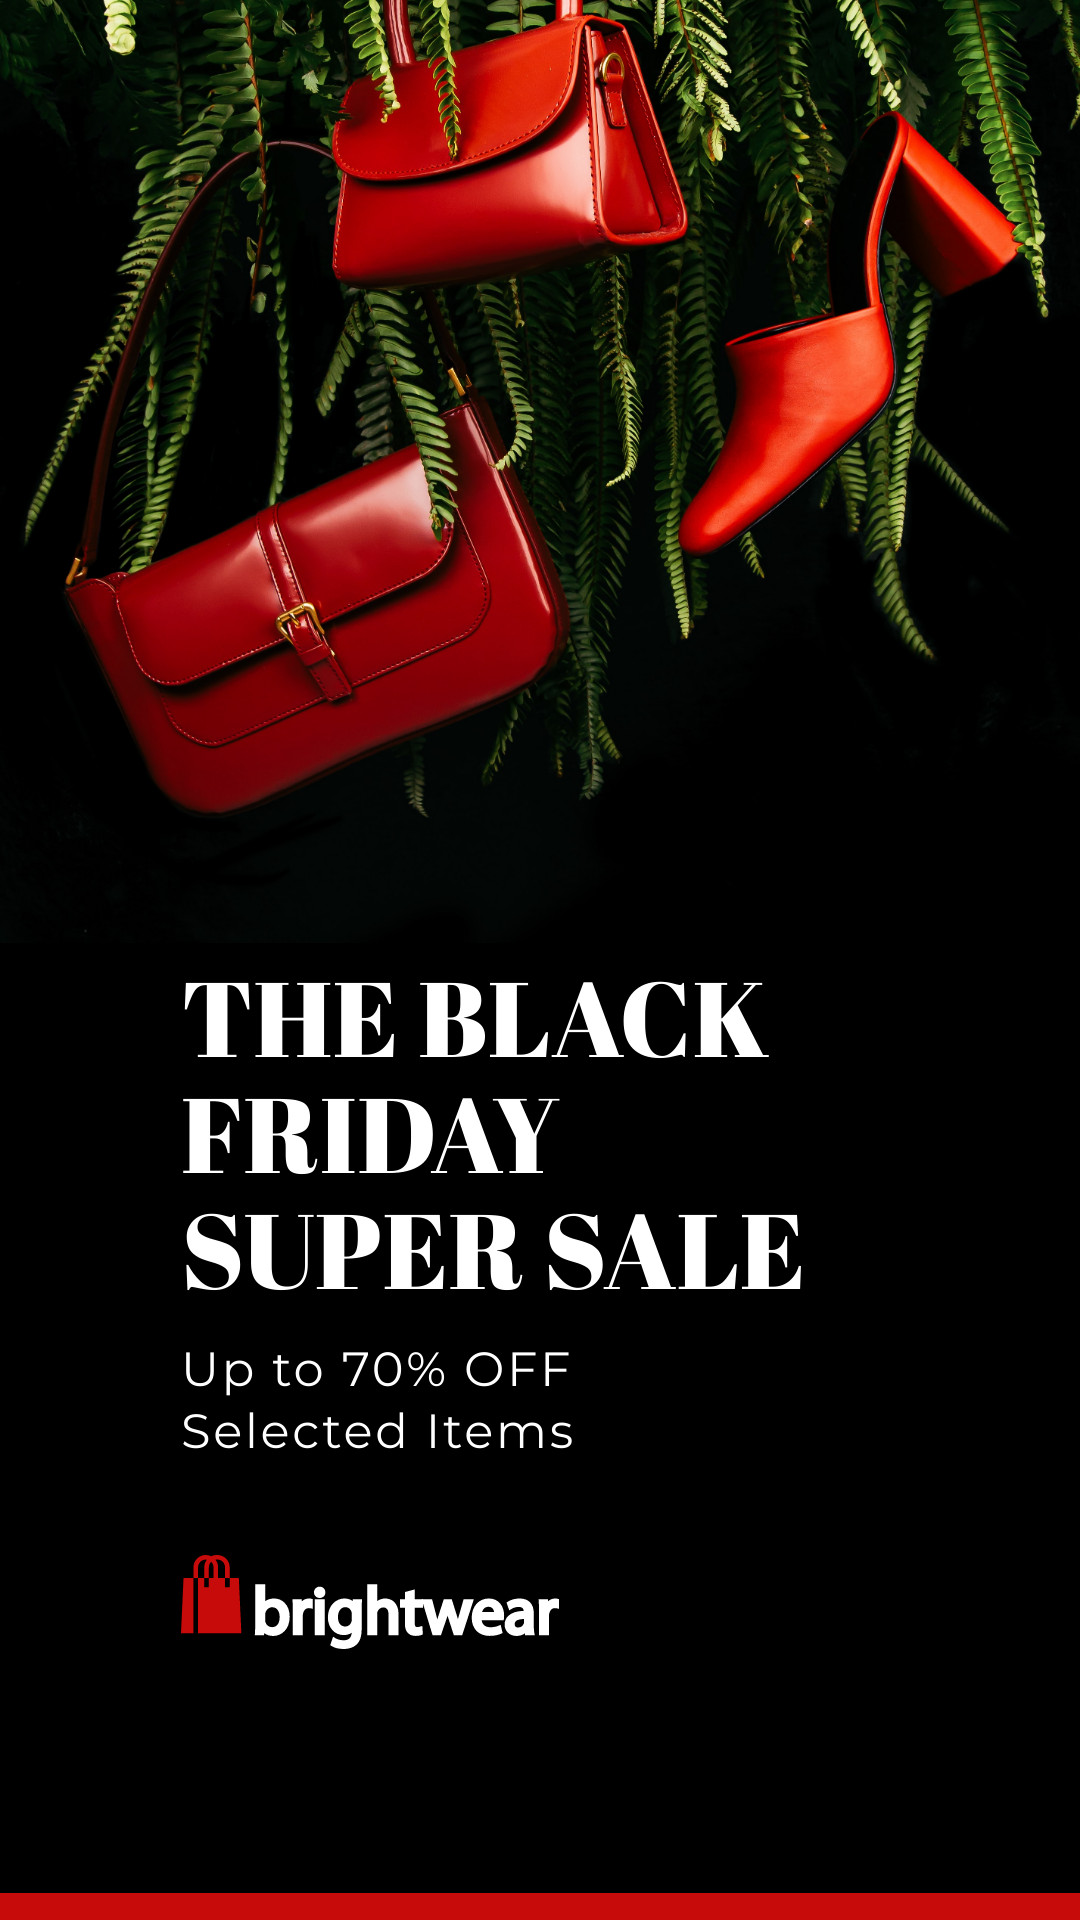 Red Handbag Black Friday Sale